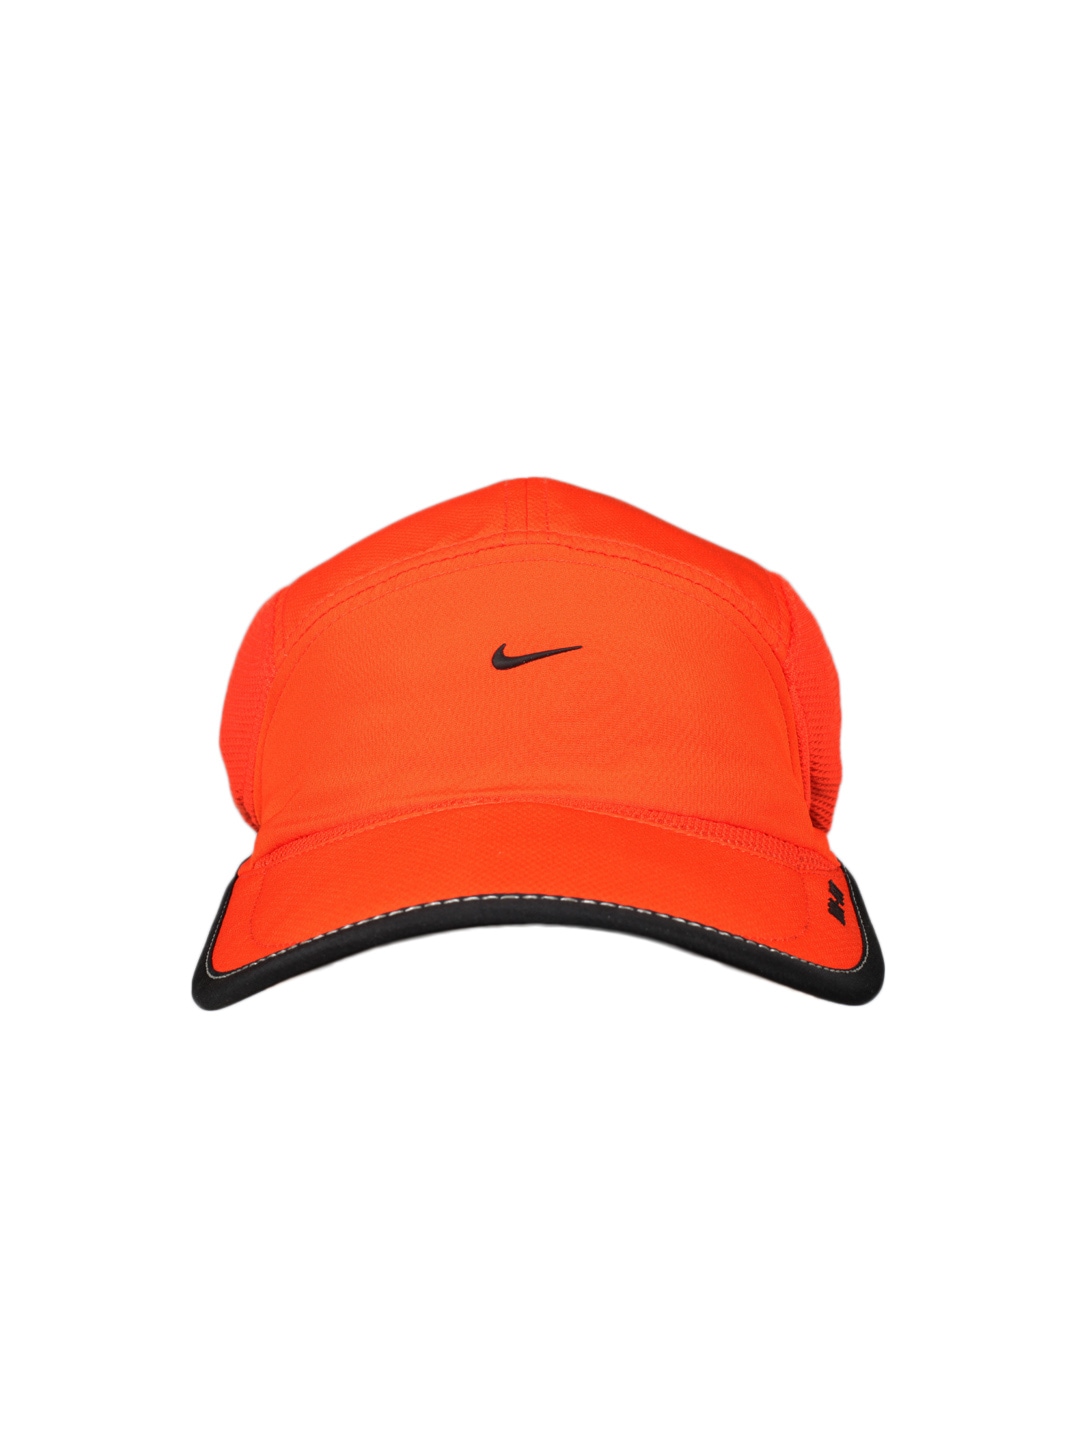 Nike Unisex Orange Daybreak Cap